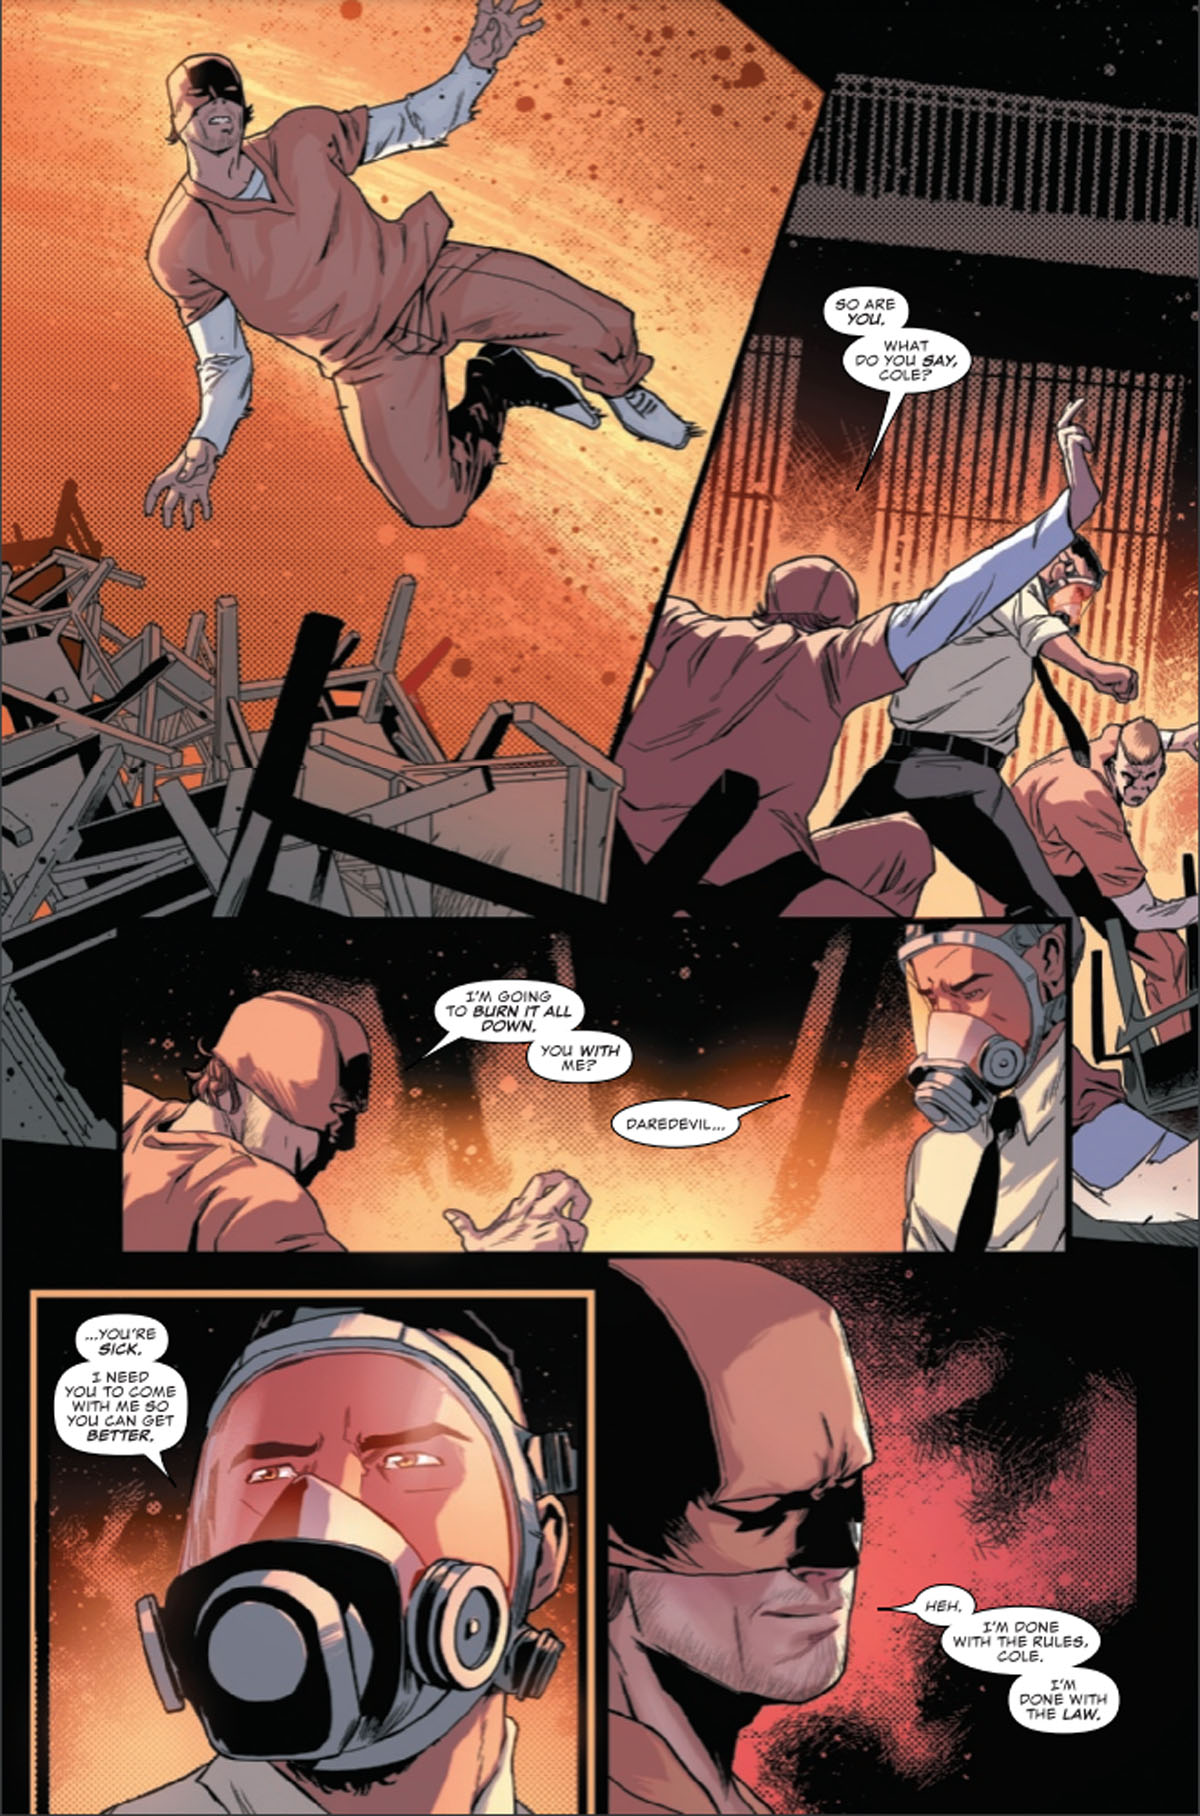 Daredevil #34 page 4